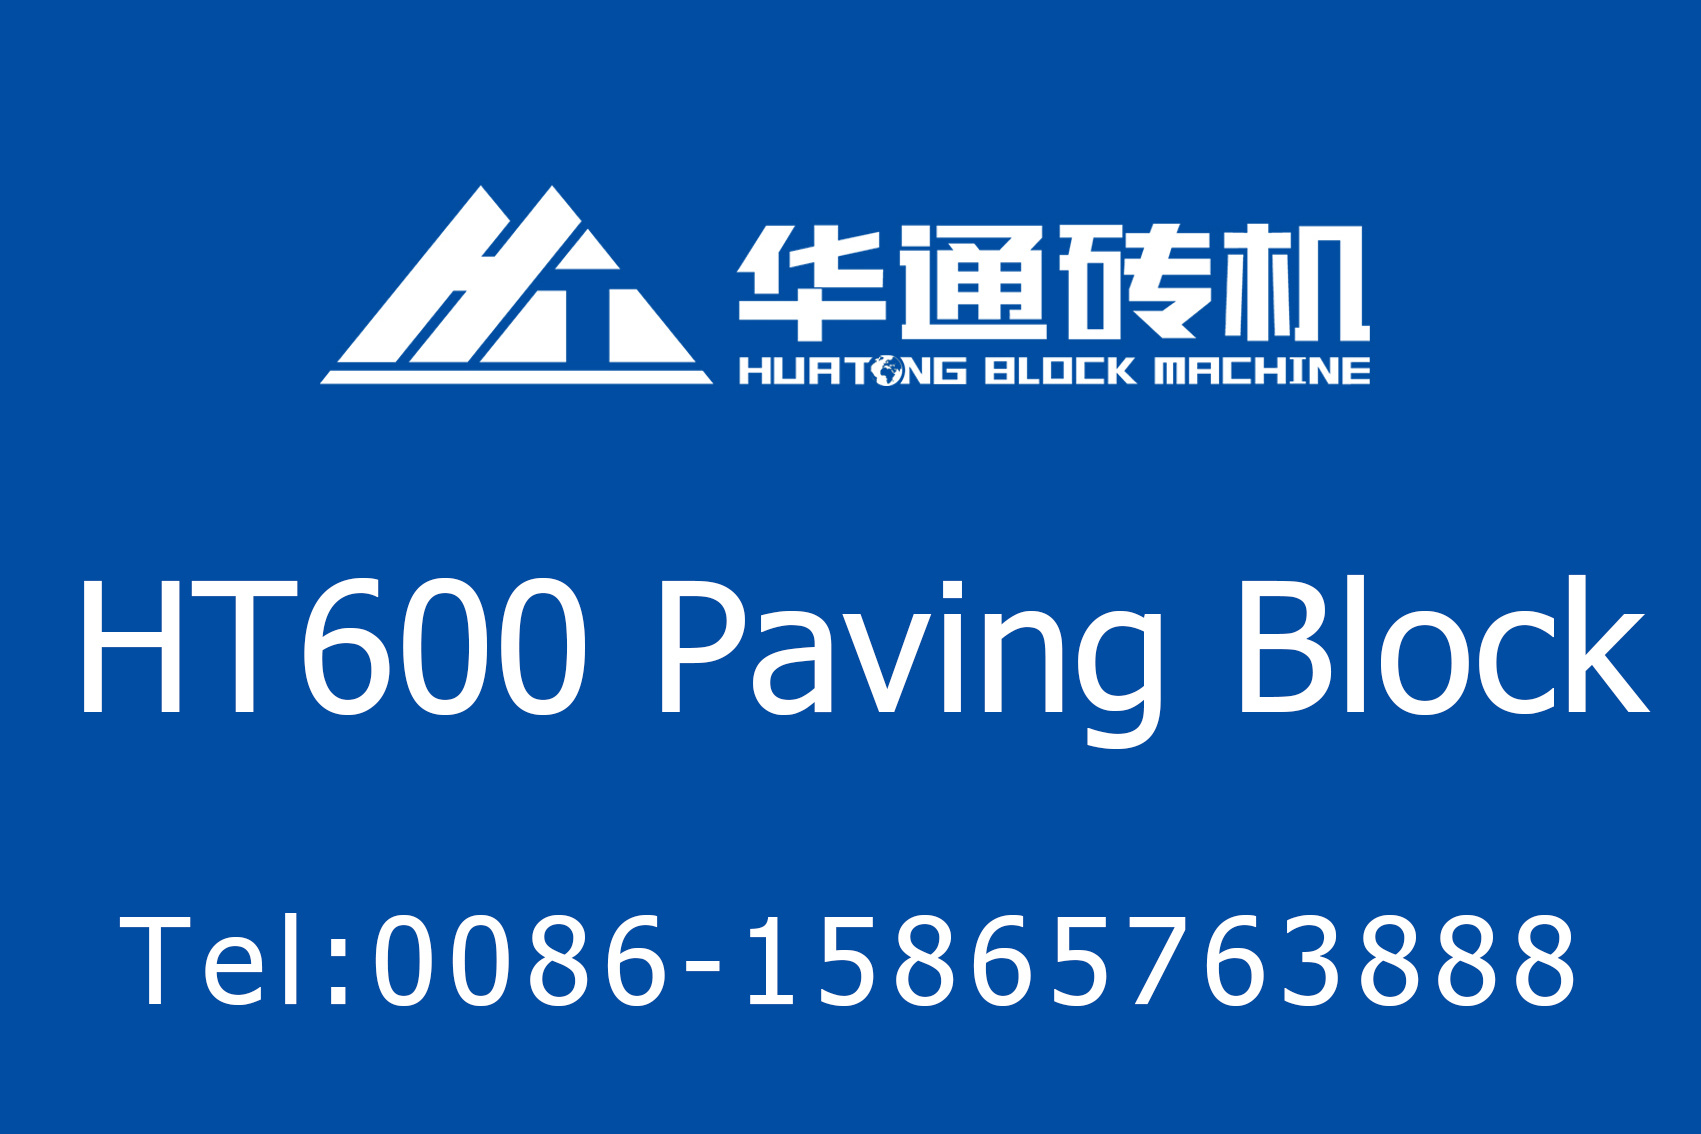 HT600 Paving Block